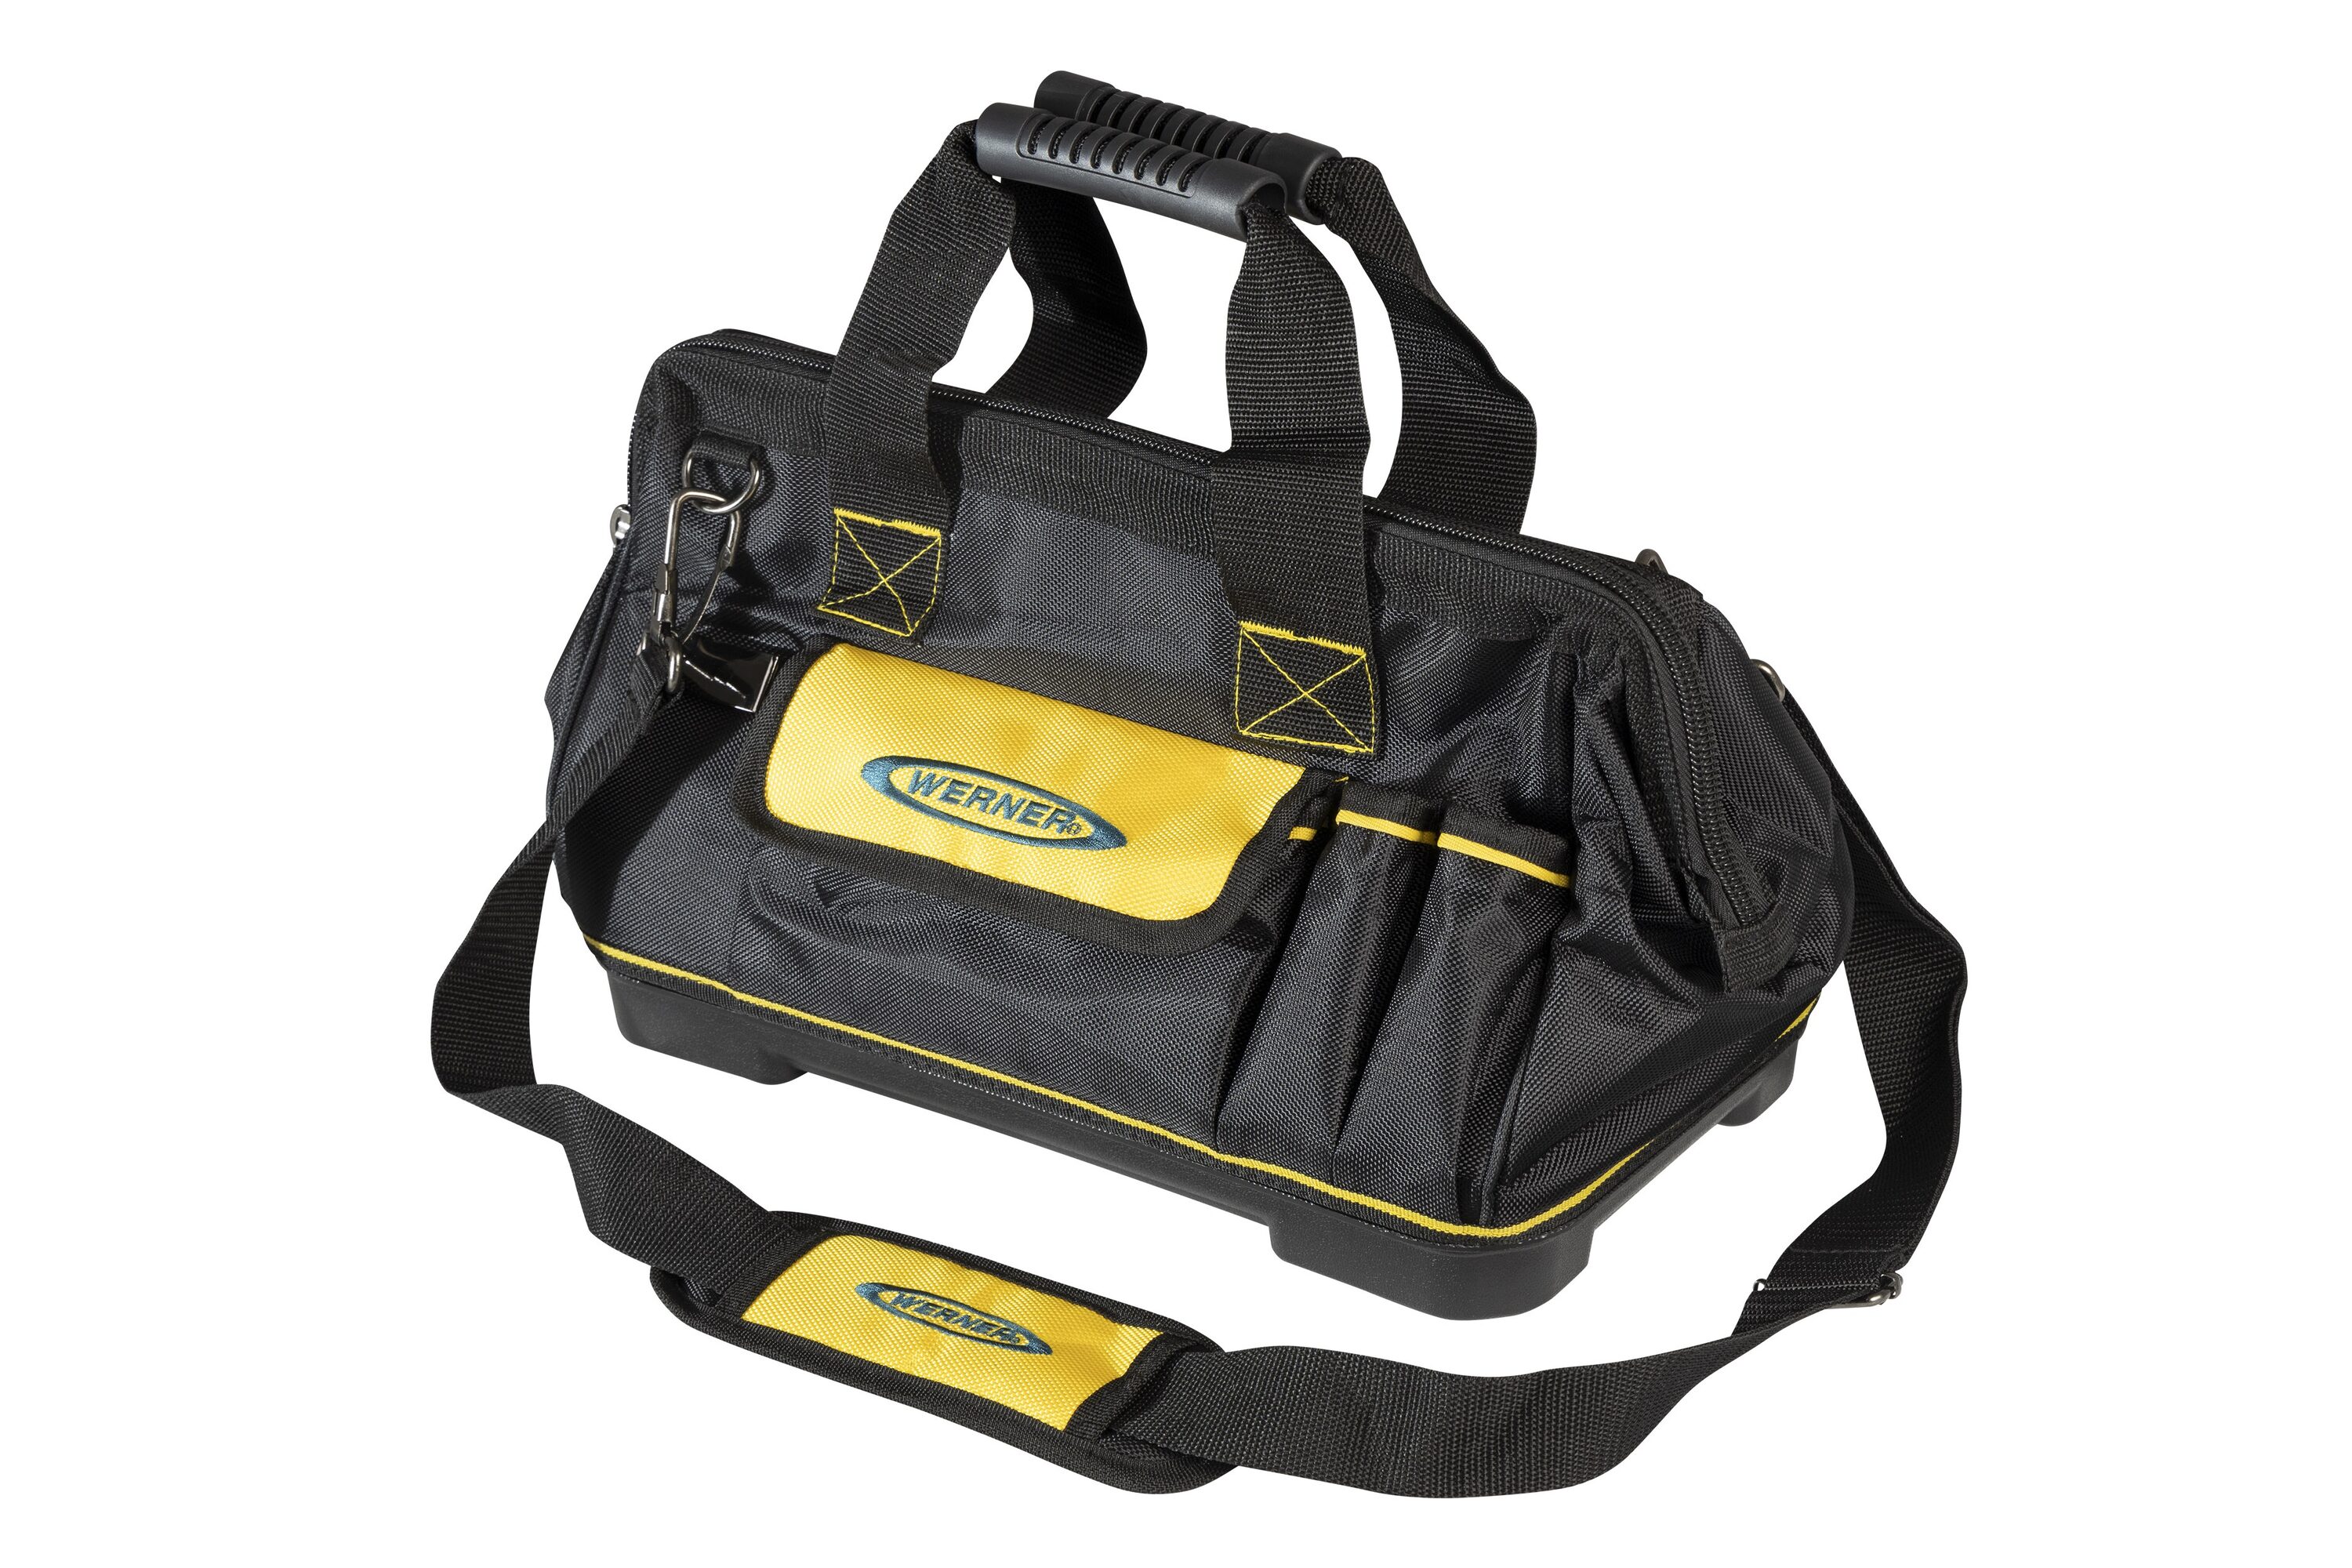 Werner 1028594 Nylon Tool Bag, Black & Yellow - Pack of 4